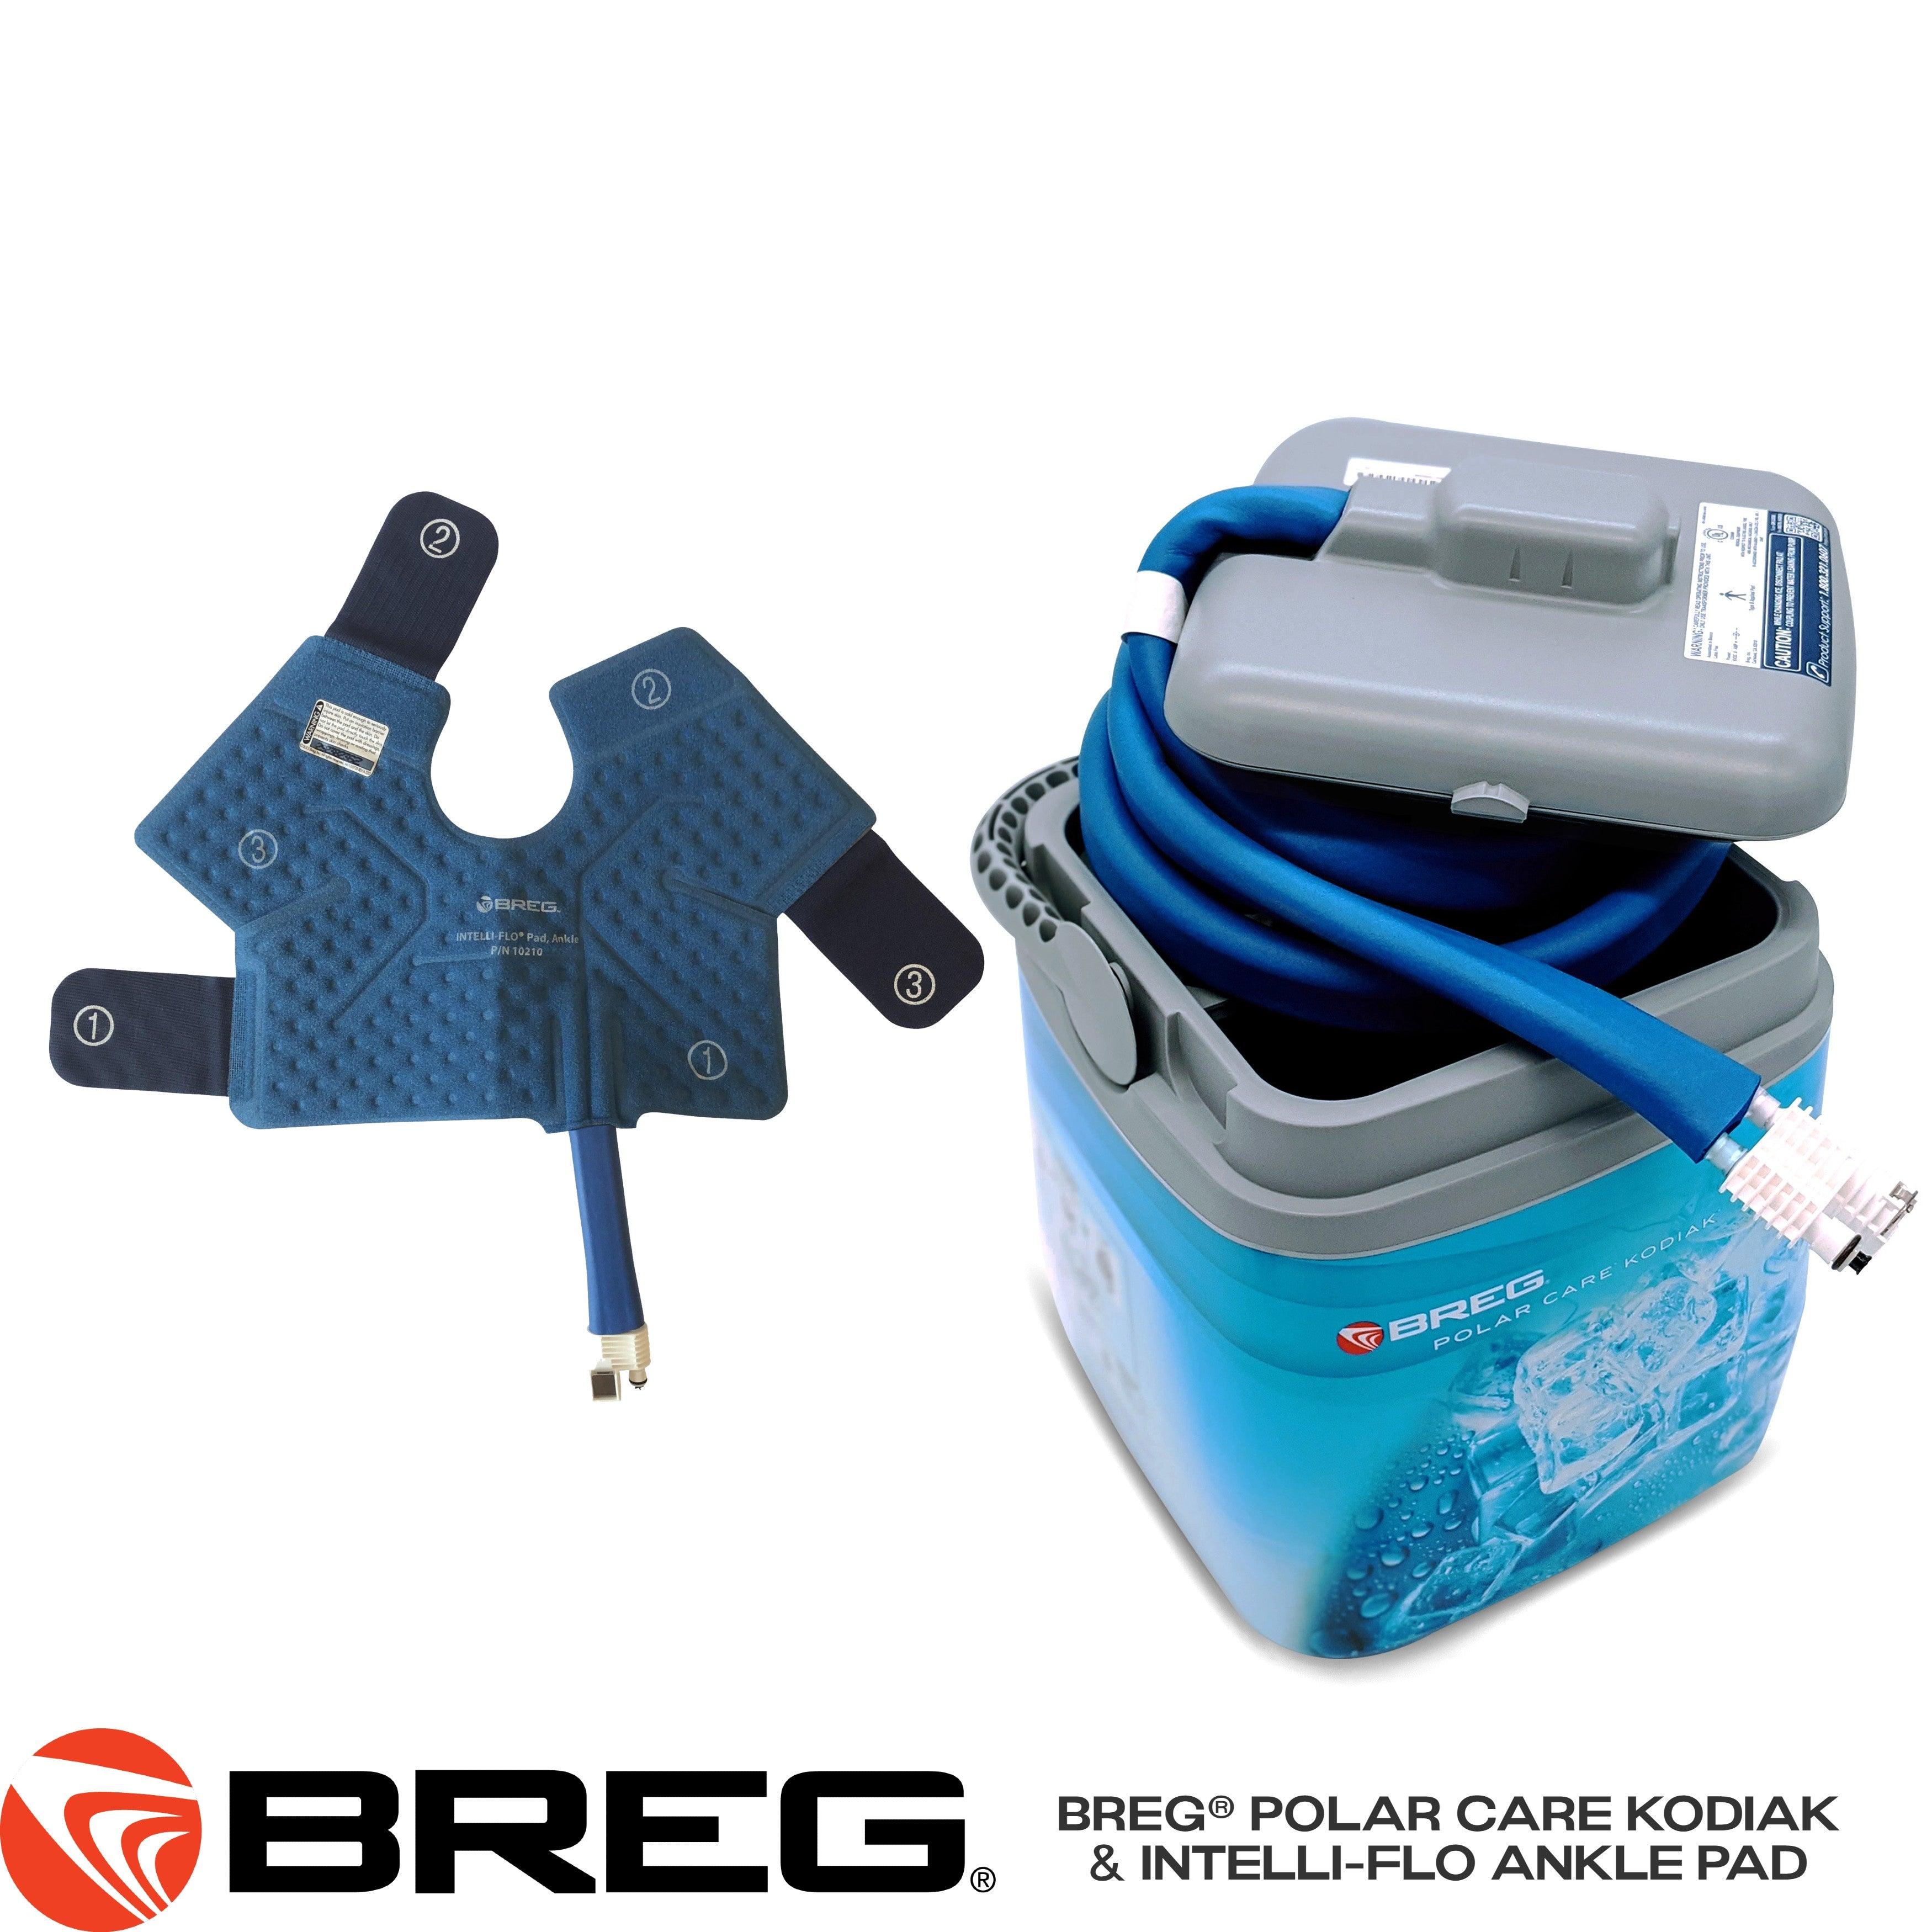 Breg® Polar Care Kodiak Cooler w/ Ankle Pad - 10210 Breg® Polar Care Kodiak Cooler w/ Ankle Pad - undefined by Supply Physical Therapy Ankle, Breg, Cold Therapy Units, Kodiak